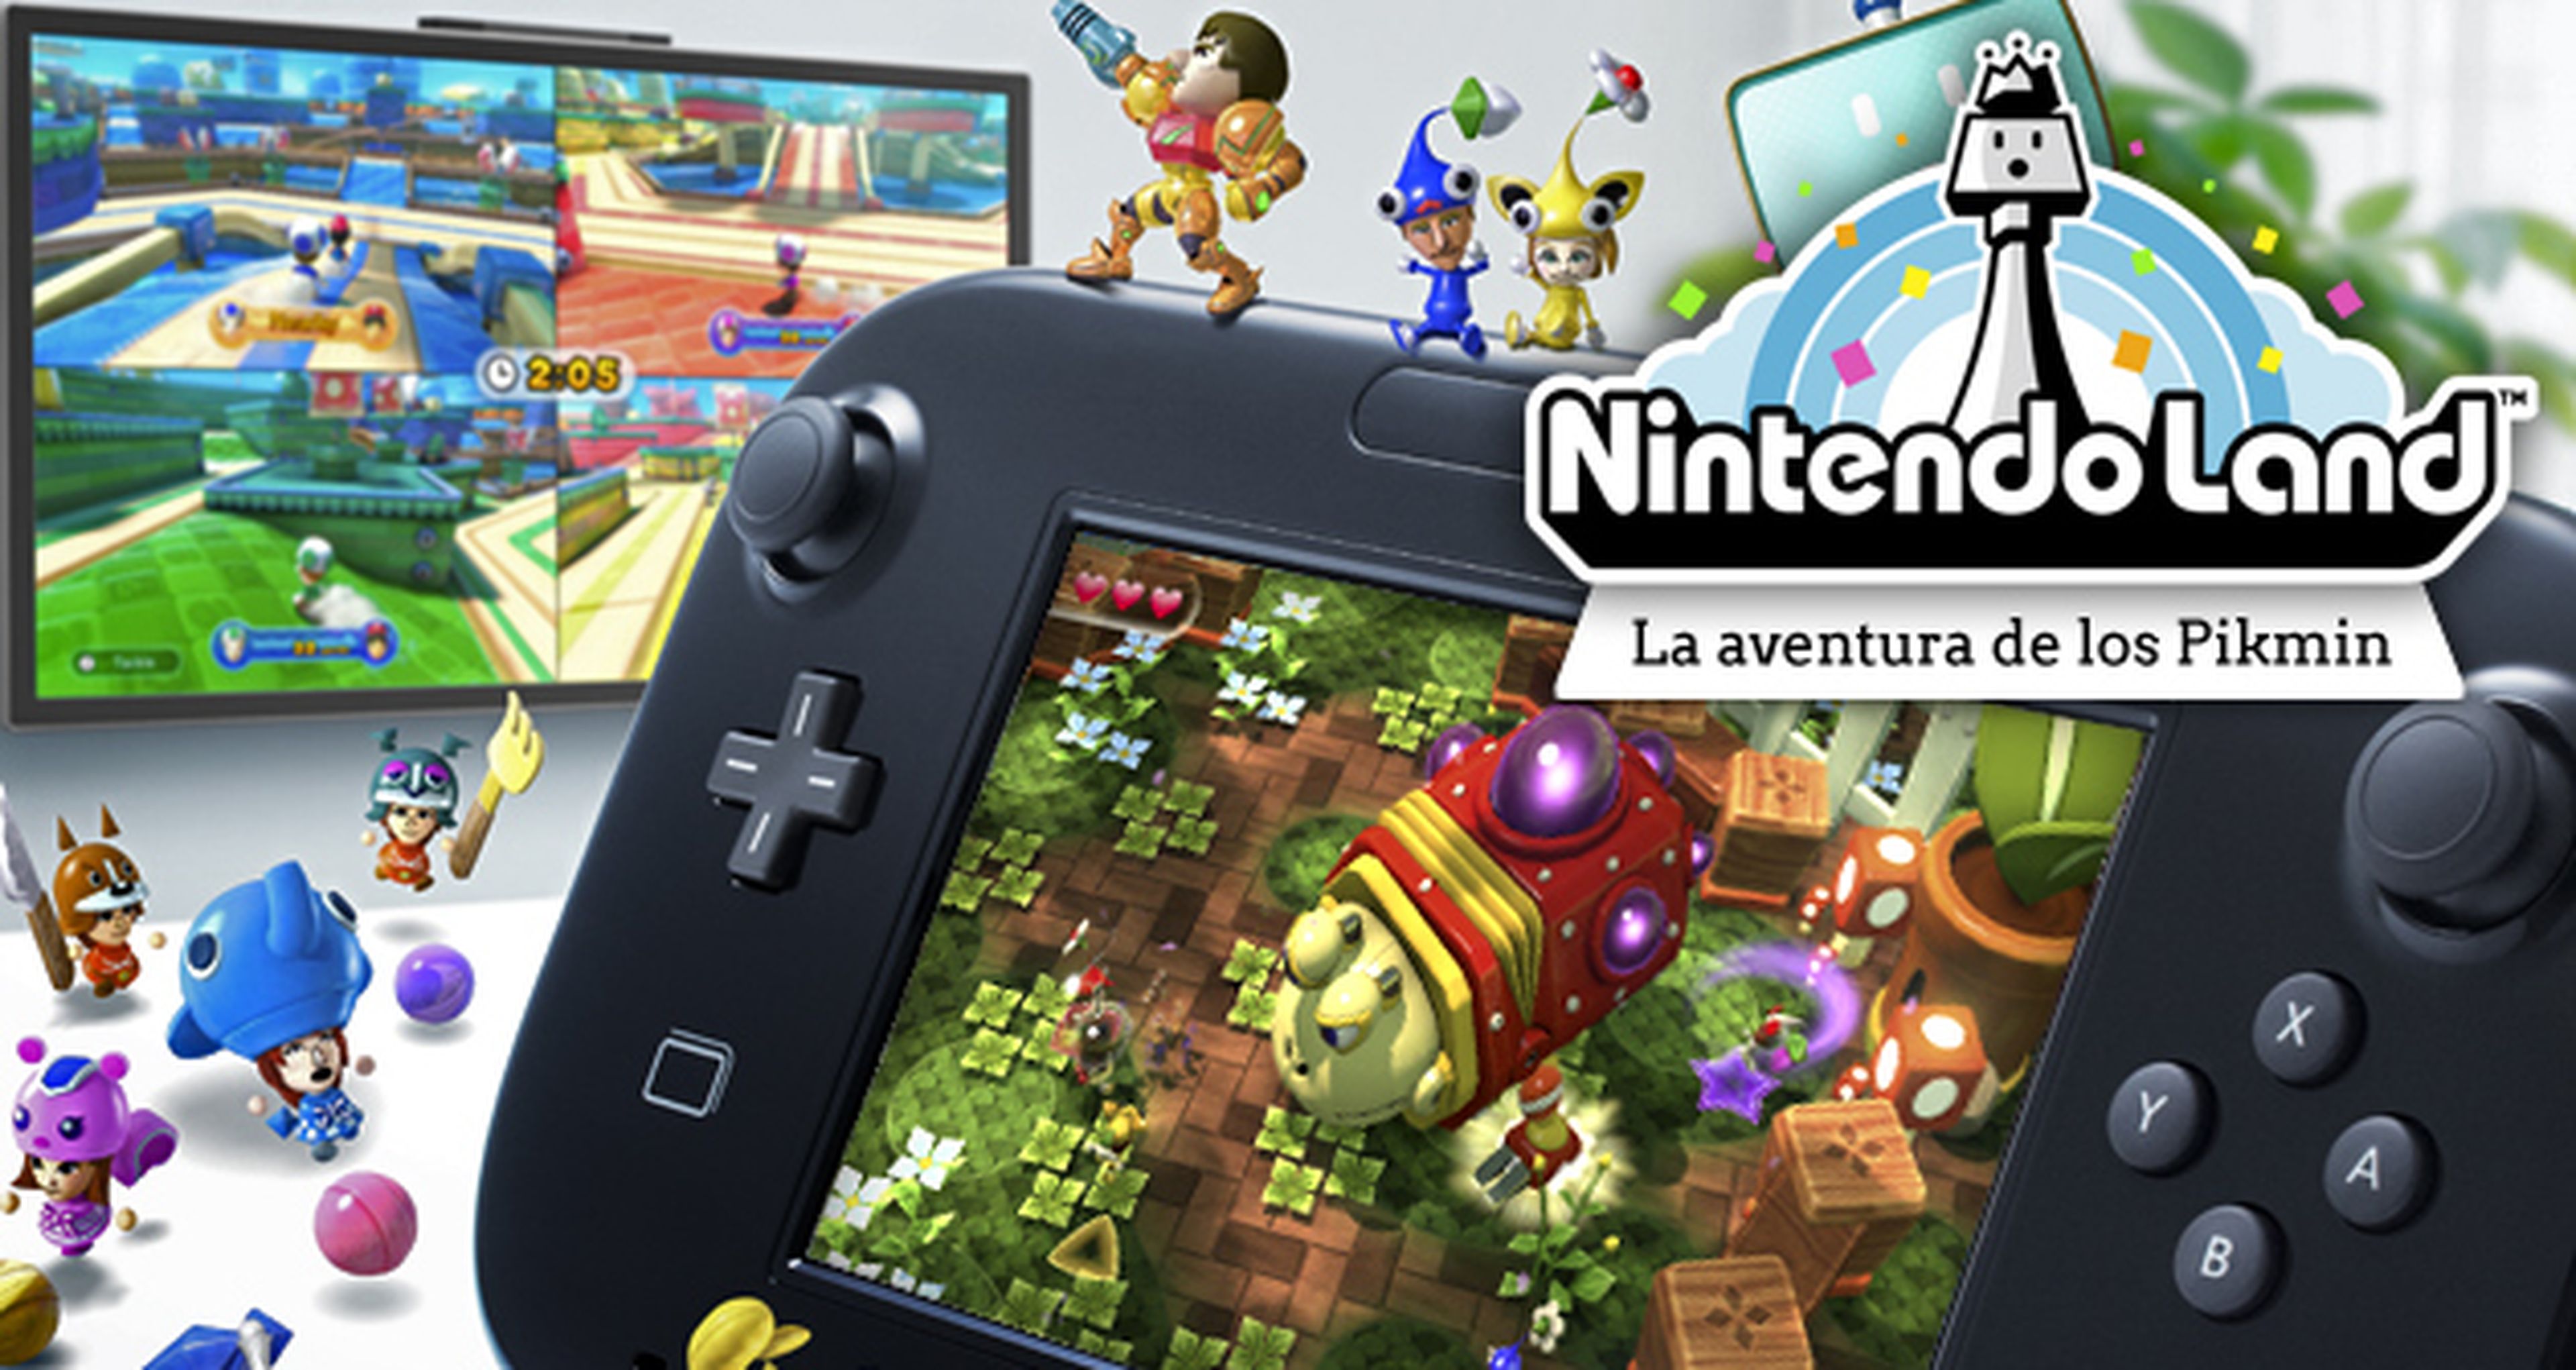 Nintendo Land: La aventura de los Pikmin